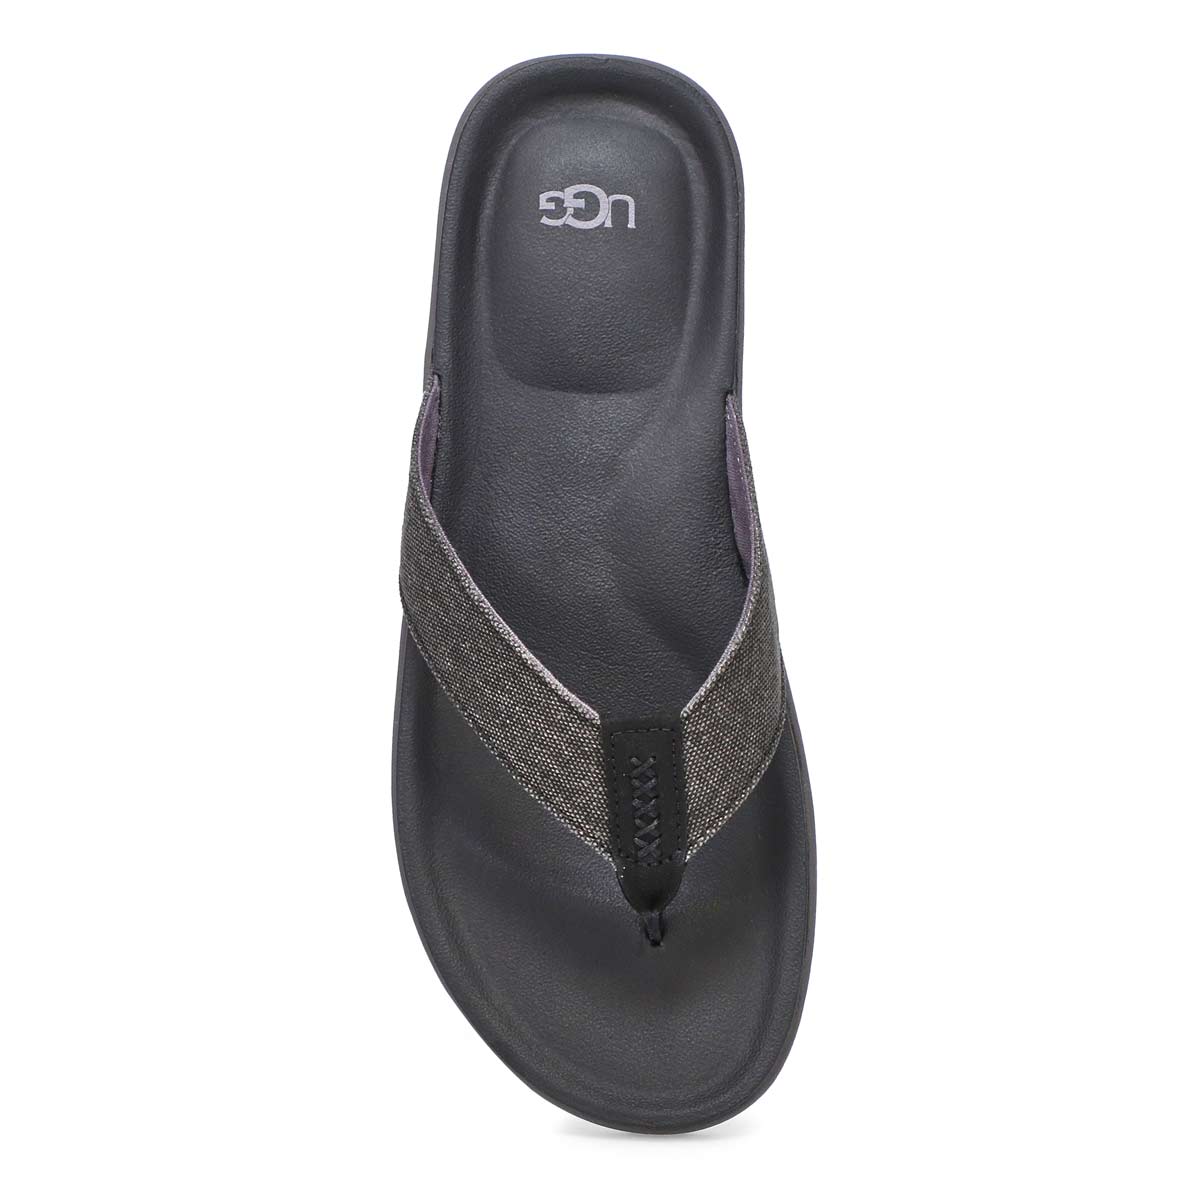 Men's Brookside Flip Thong Sandal - Black